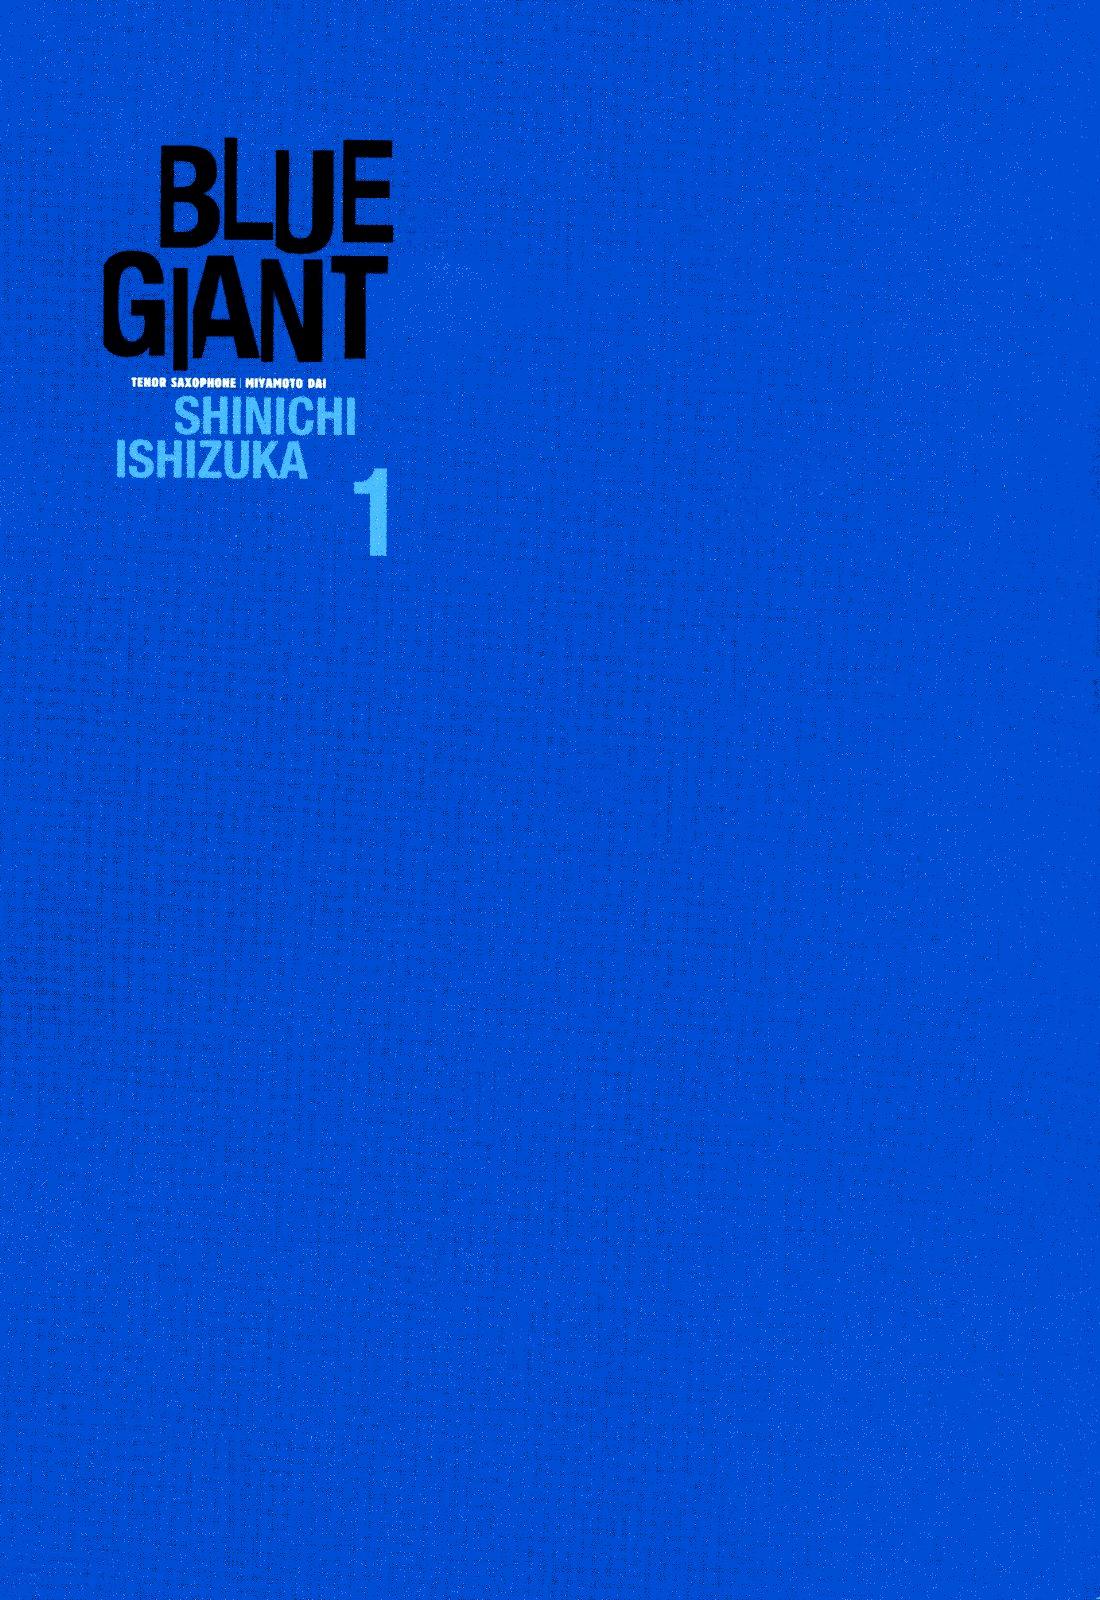 Blue giant. Giant синий. Blue giant Star. Синий гигант обложка.